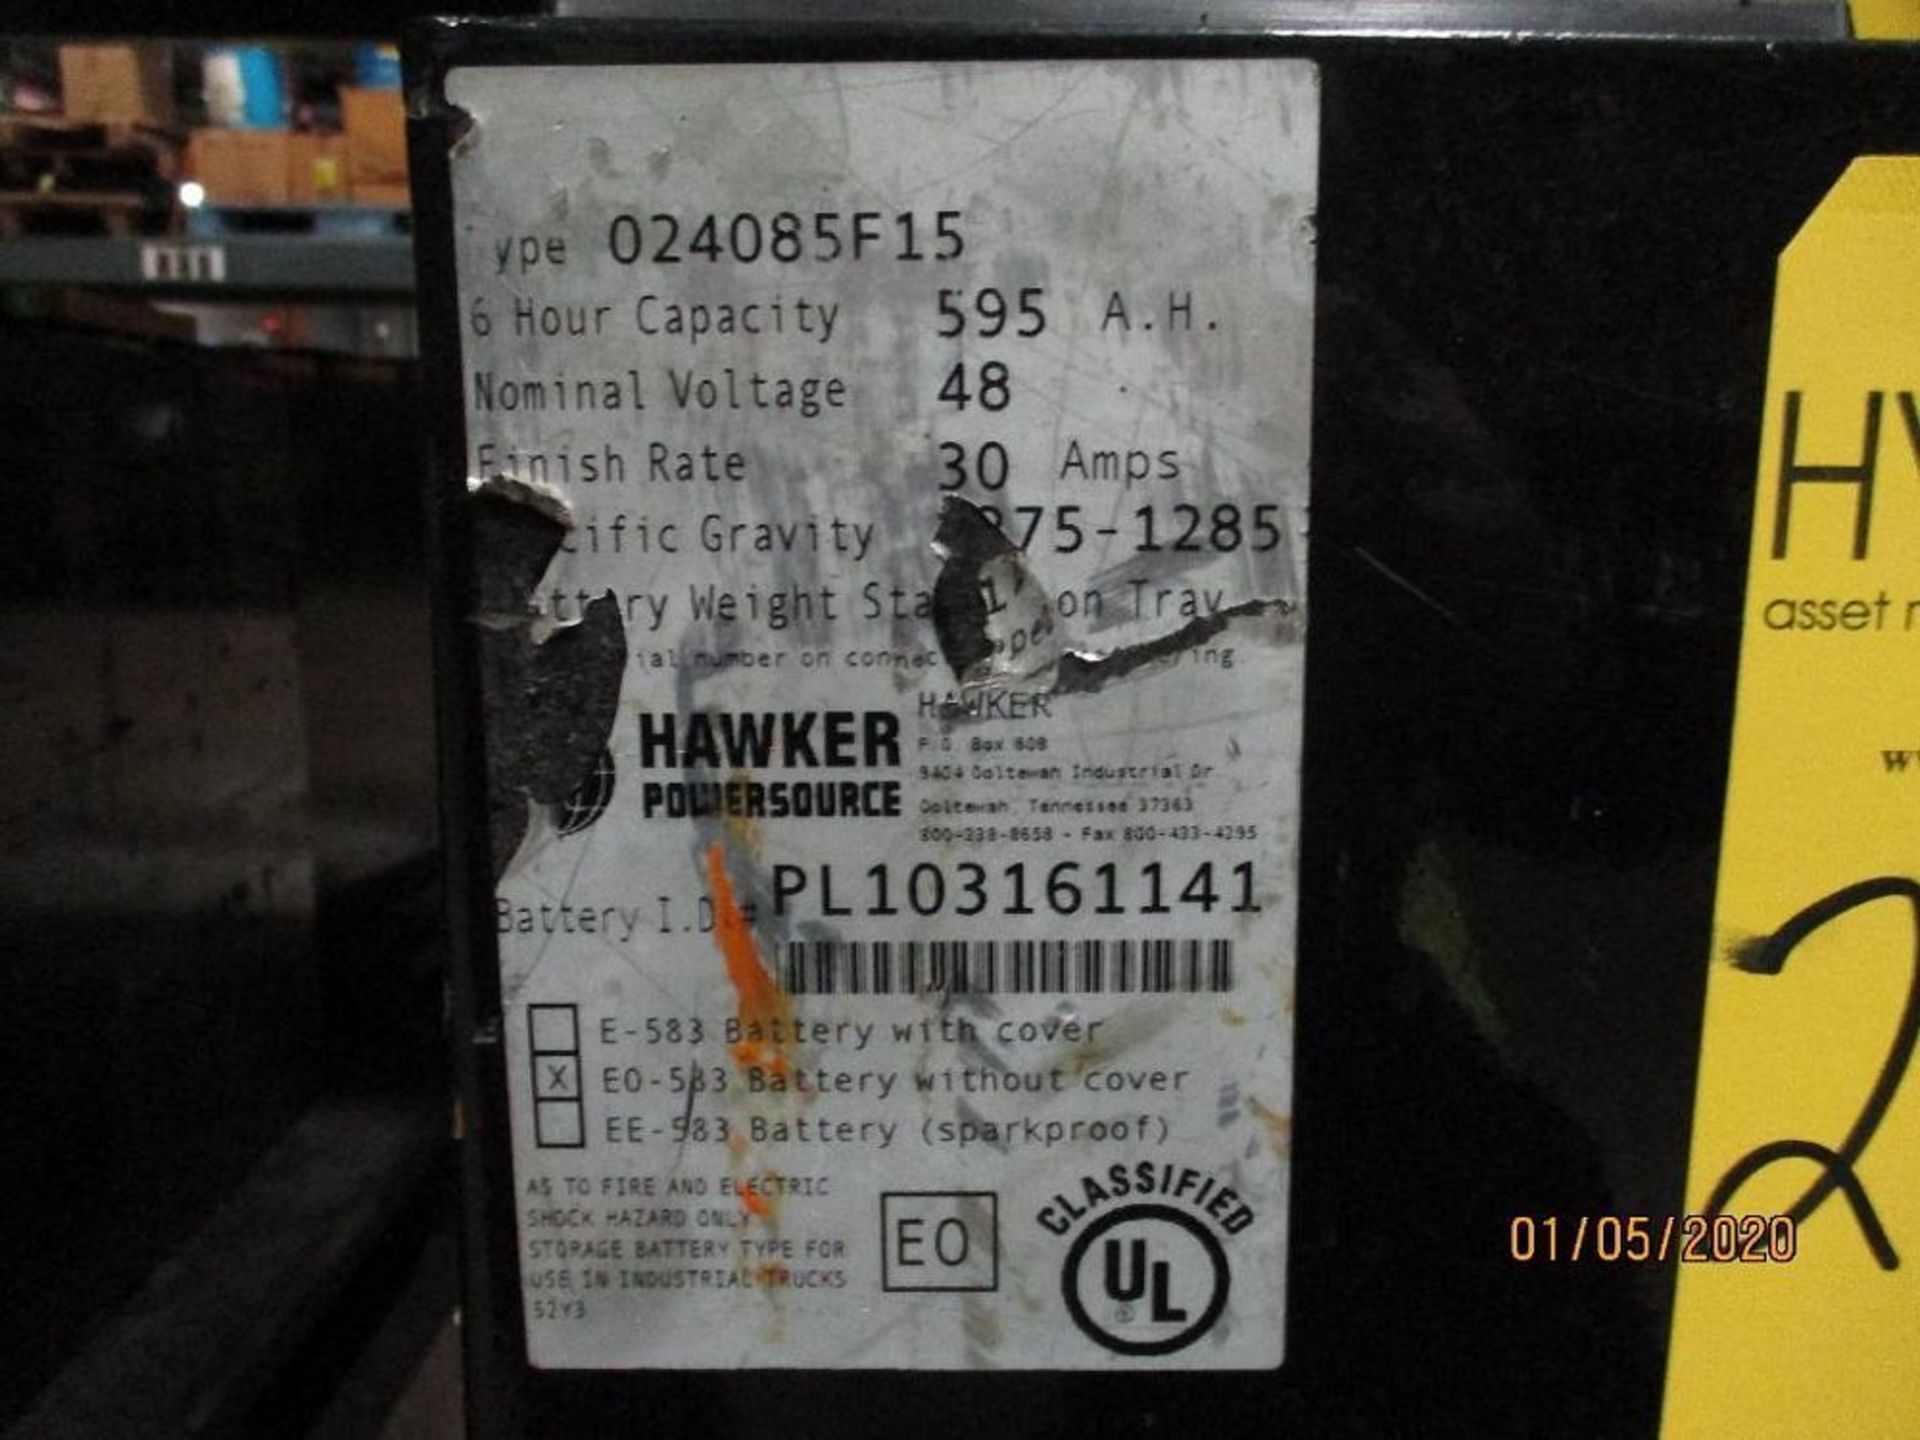 Hawker Forklift Battery (39) 595 Amp Hours, 48v Type No. 024085F15 - Image 2 of 2